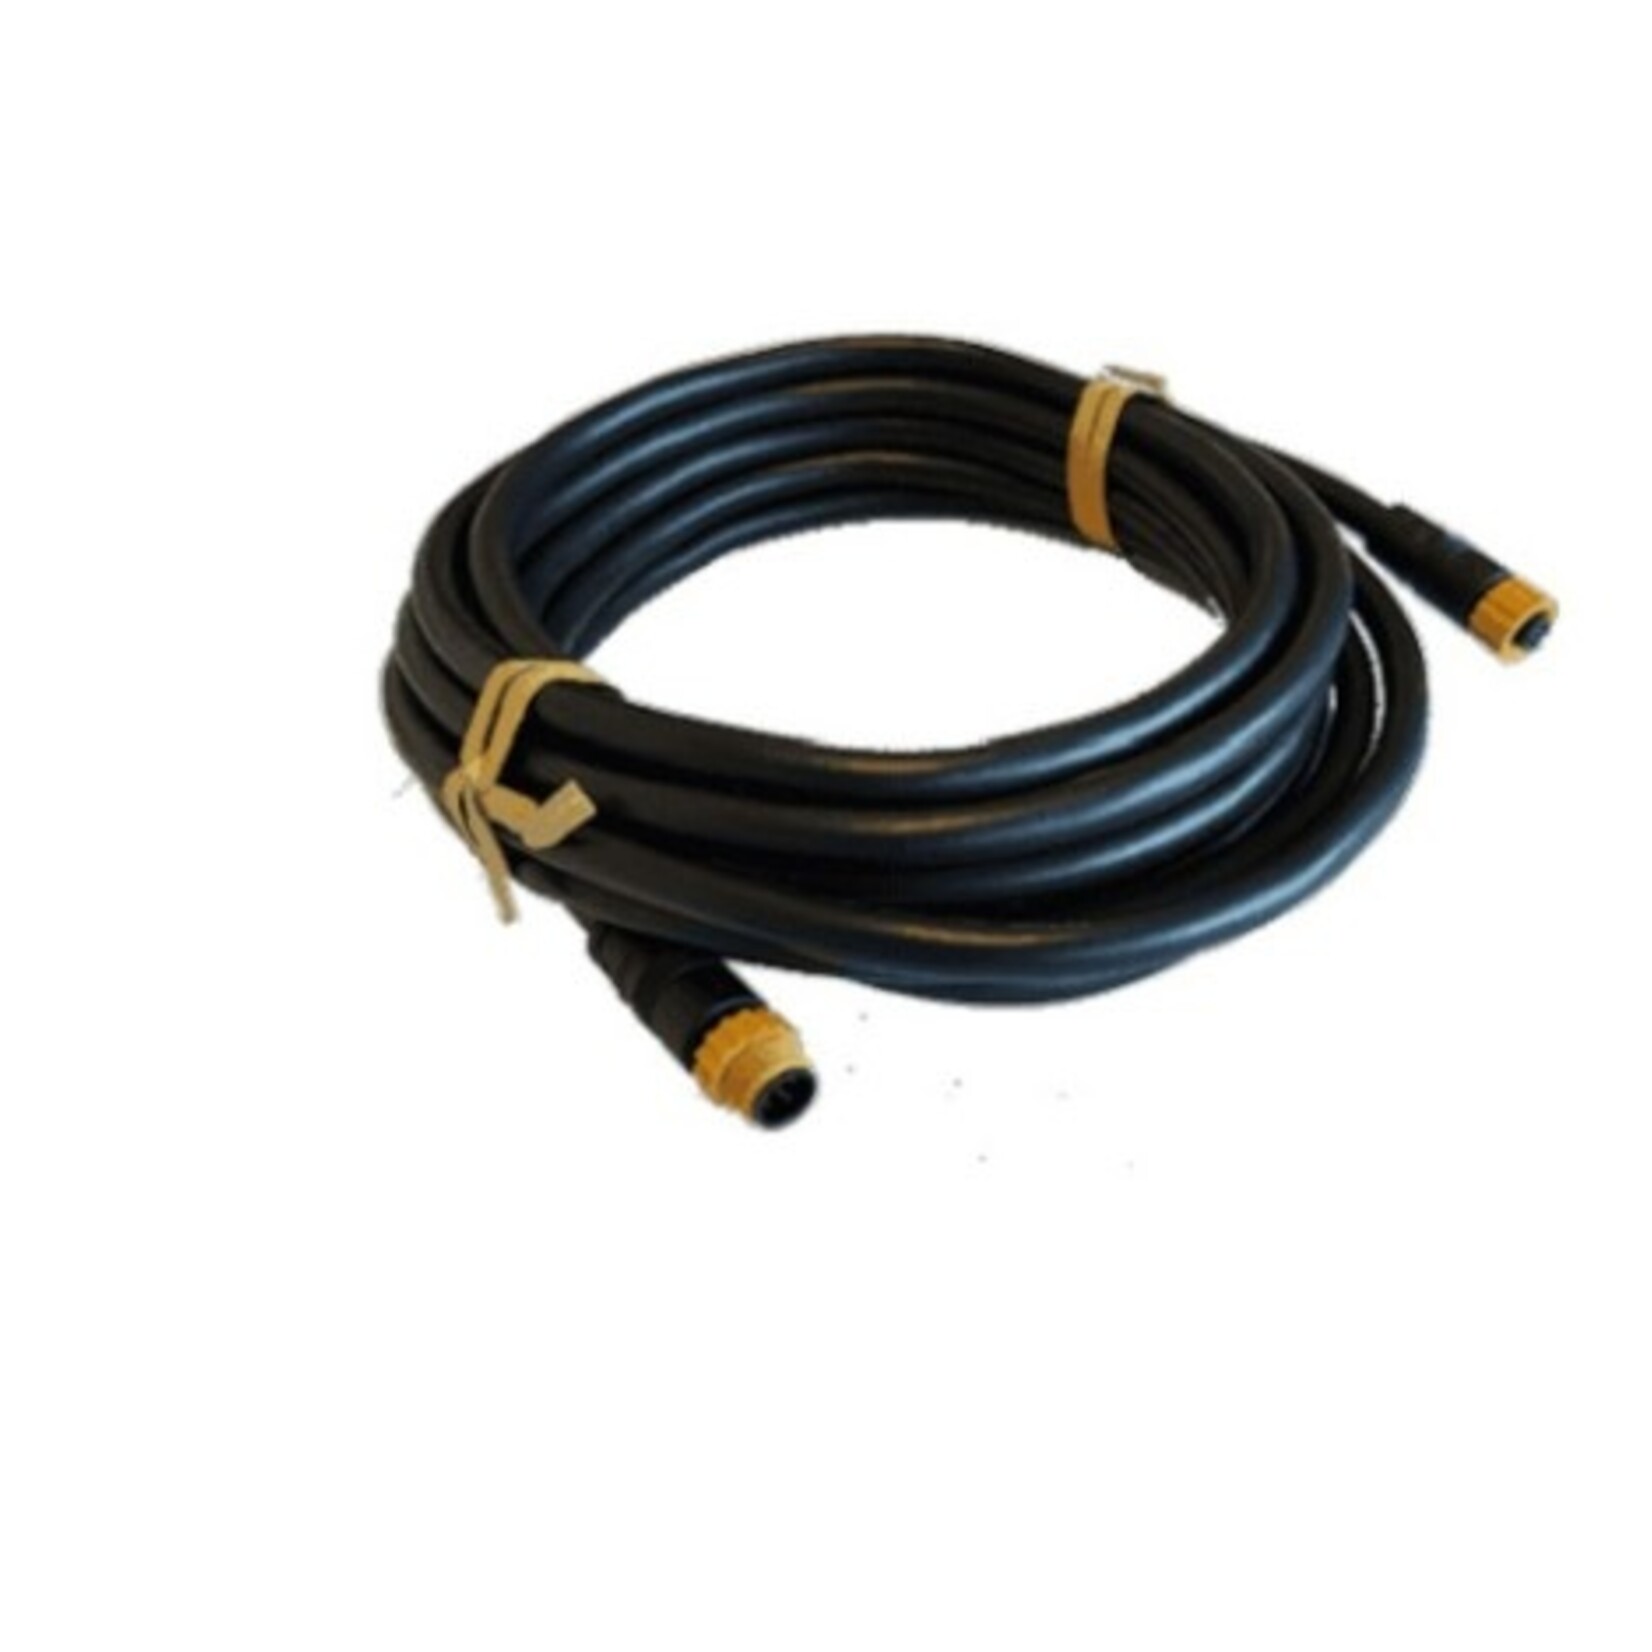 N2K Cable - Medium duty 2m (6.5ft)